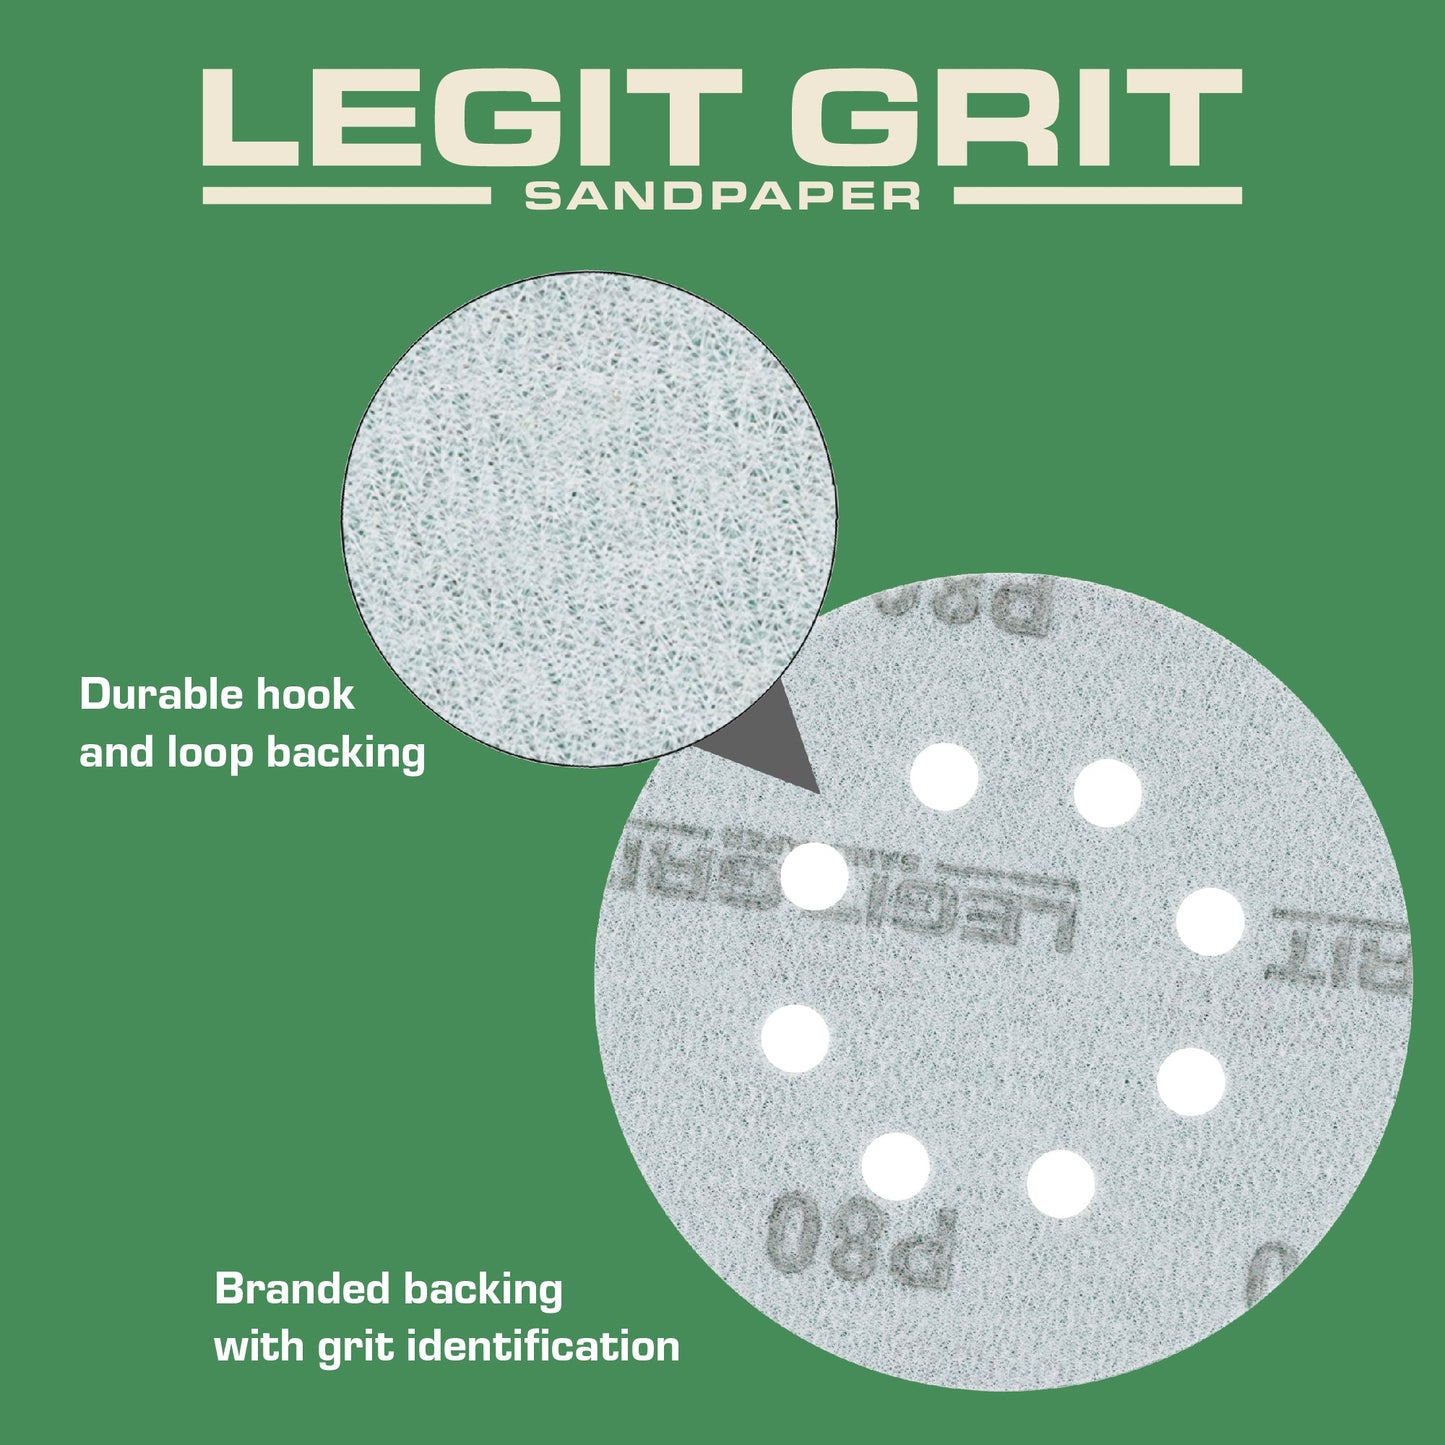 Disc Sample Pack, Mixed Grits, 2 Pieces/Grit, 10-Pack - Legit Grit